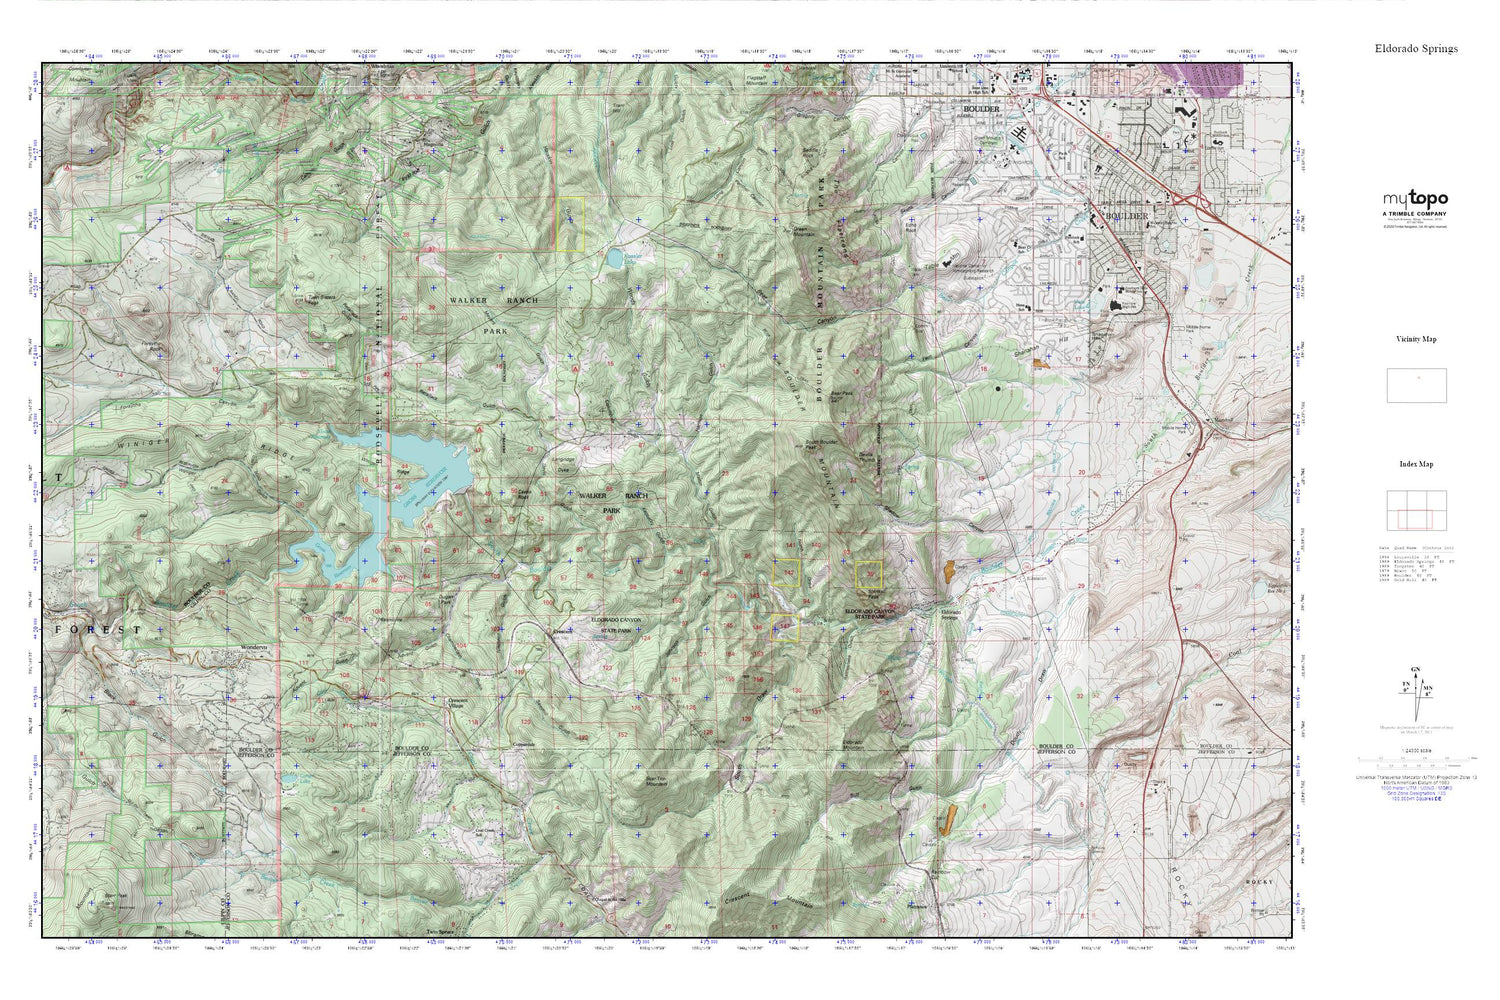 Eldorado Springs MyTopo Explorer Series Map Image